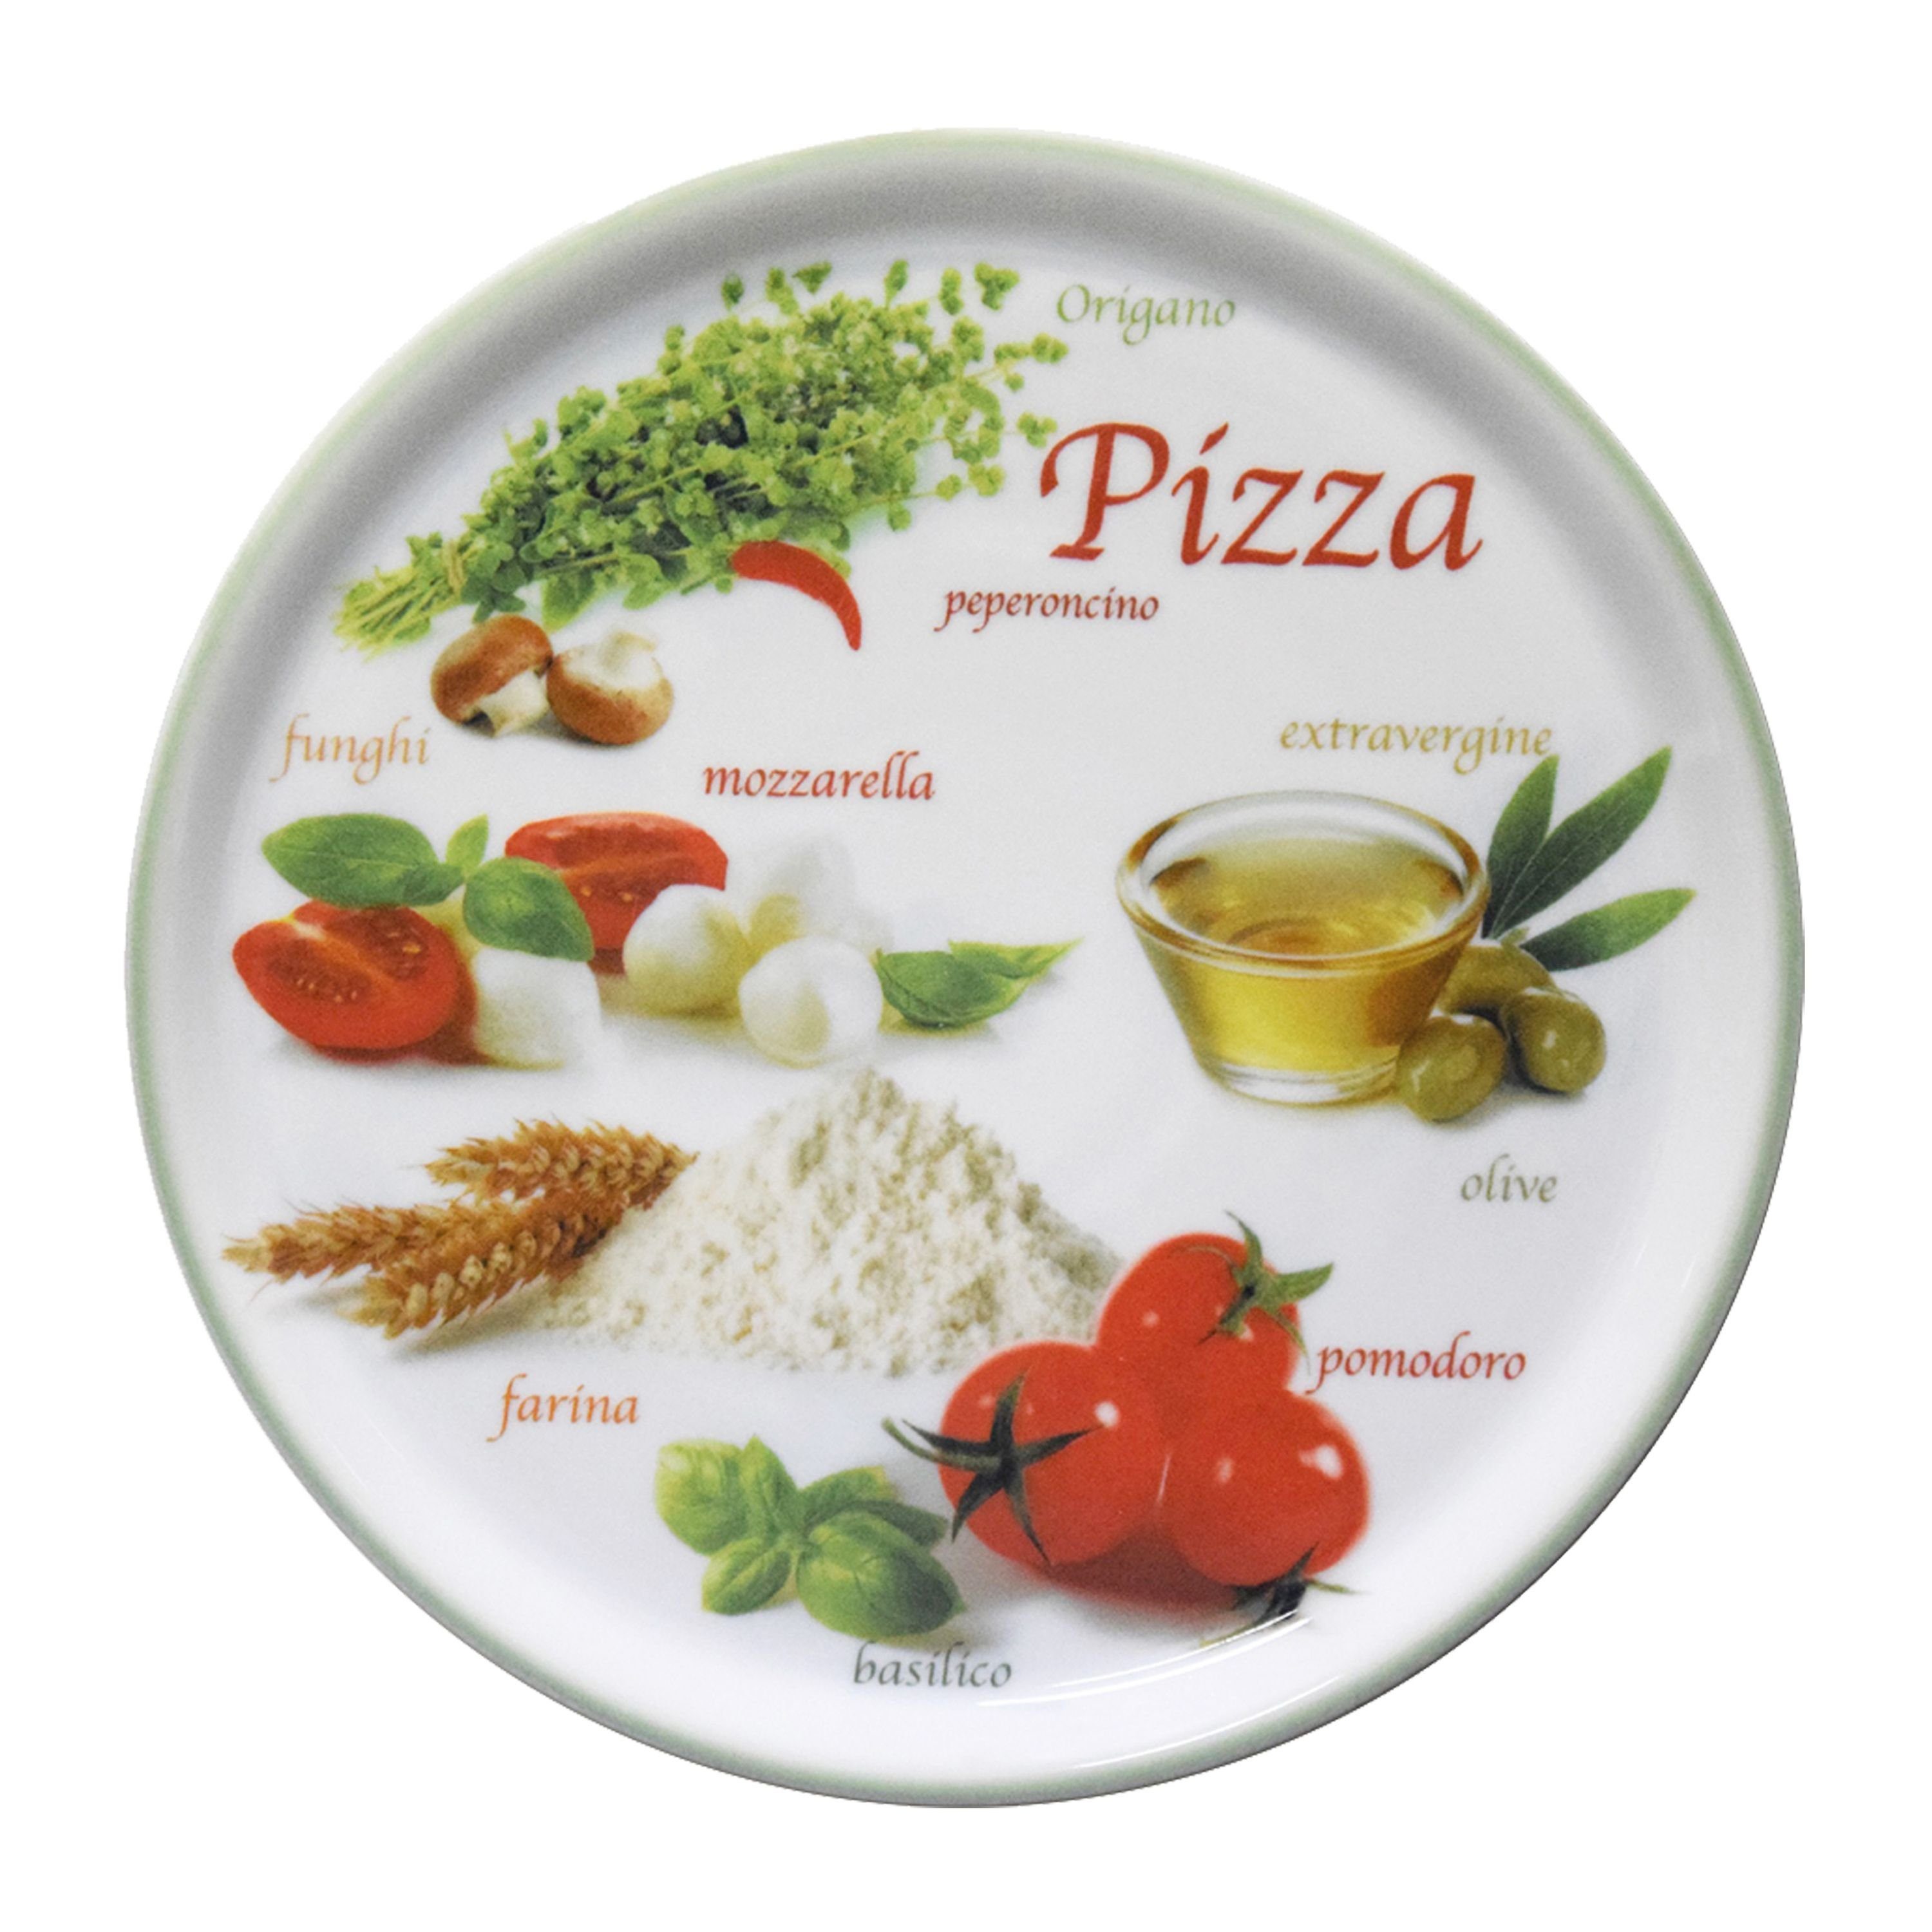 04019#ZP1 MamboCat Pizzateller Napoli 31cm - Pizzafoods grün Pizzateller